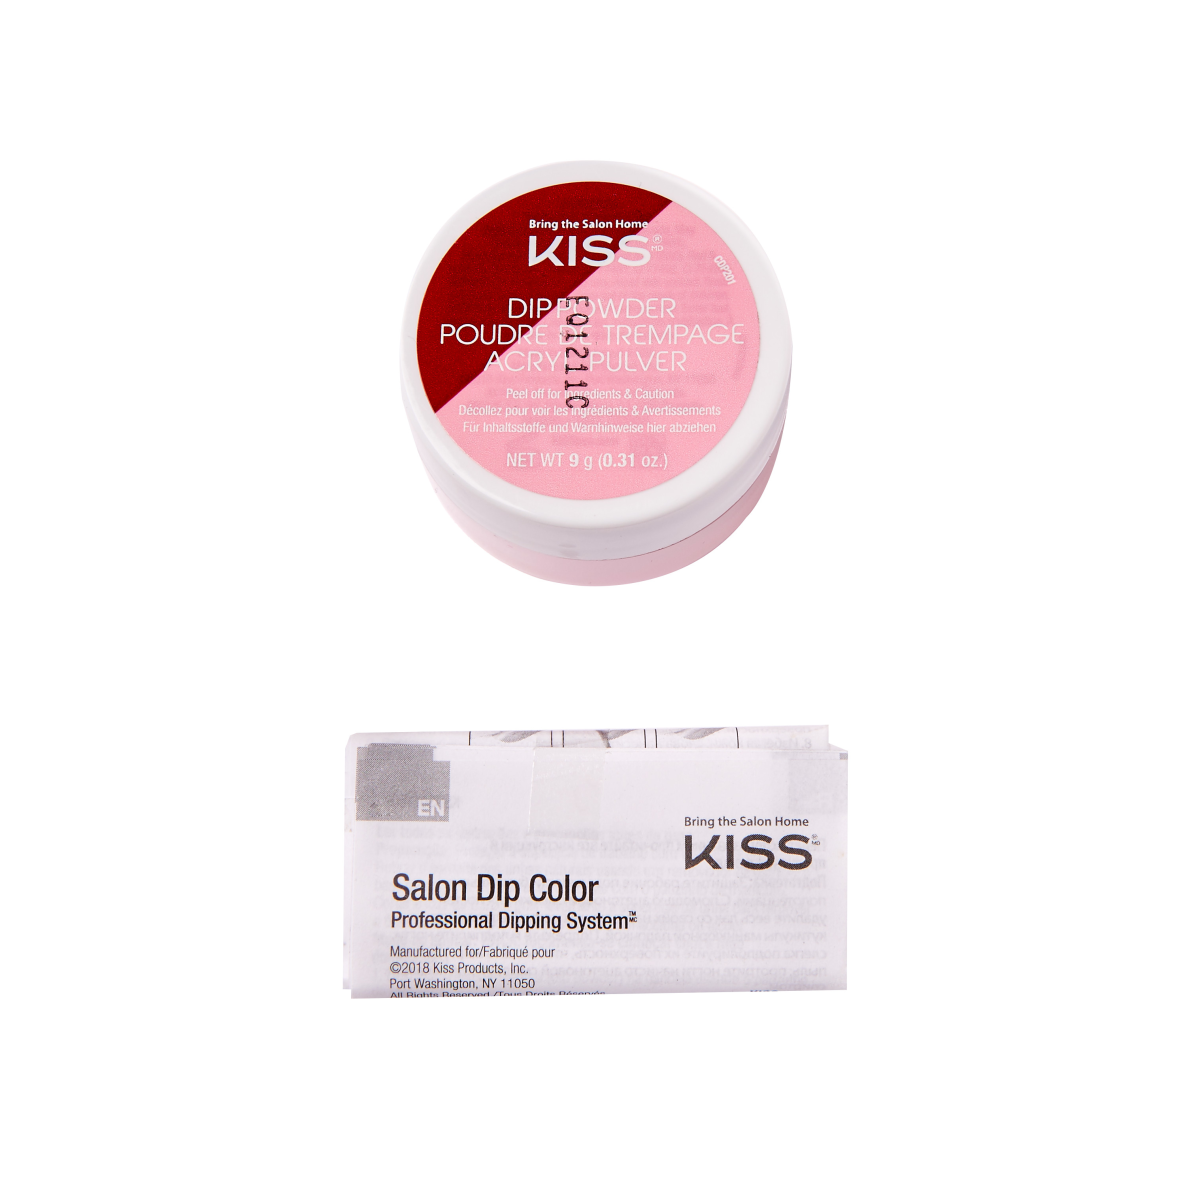 KISS Salon Dip Color Powder - Pink